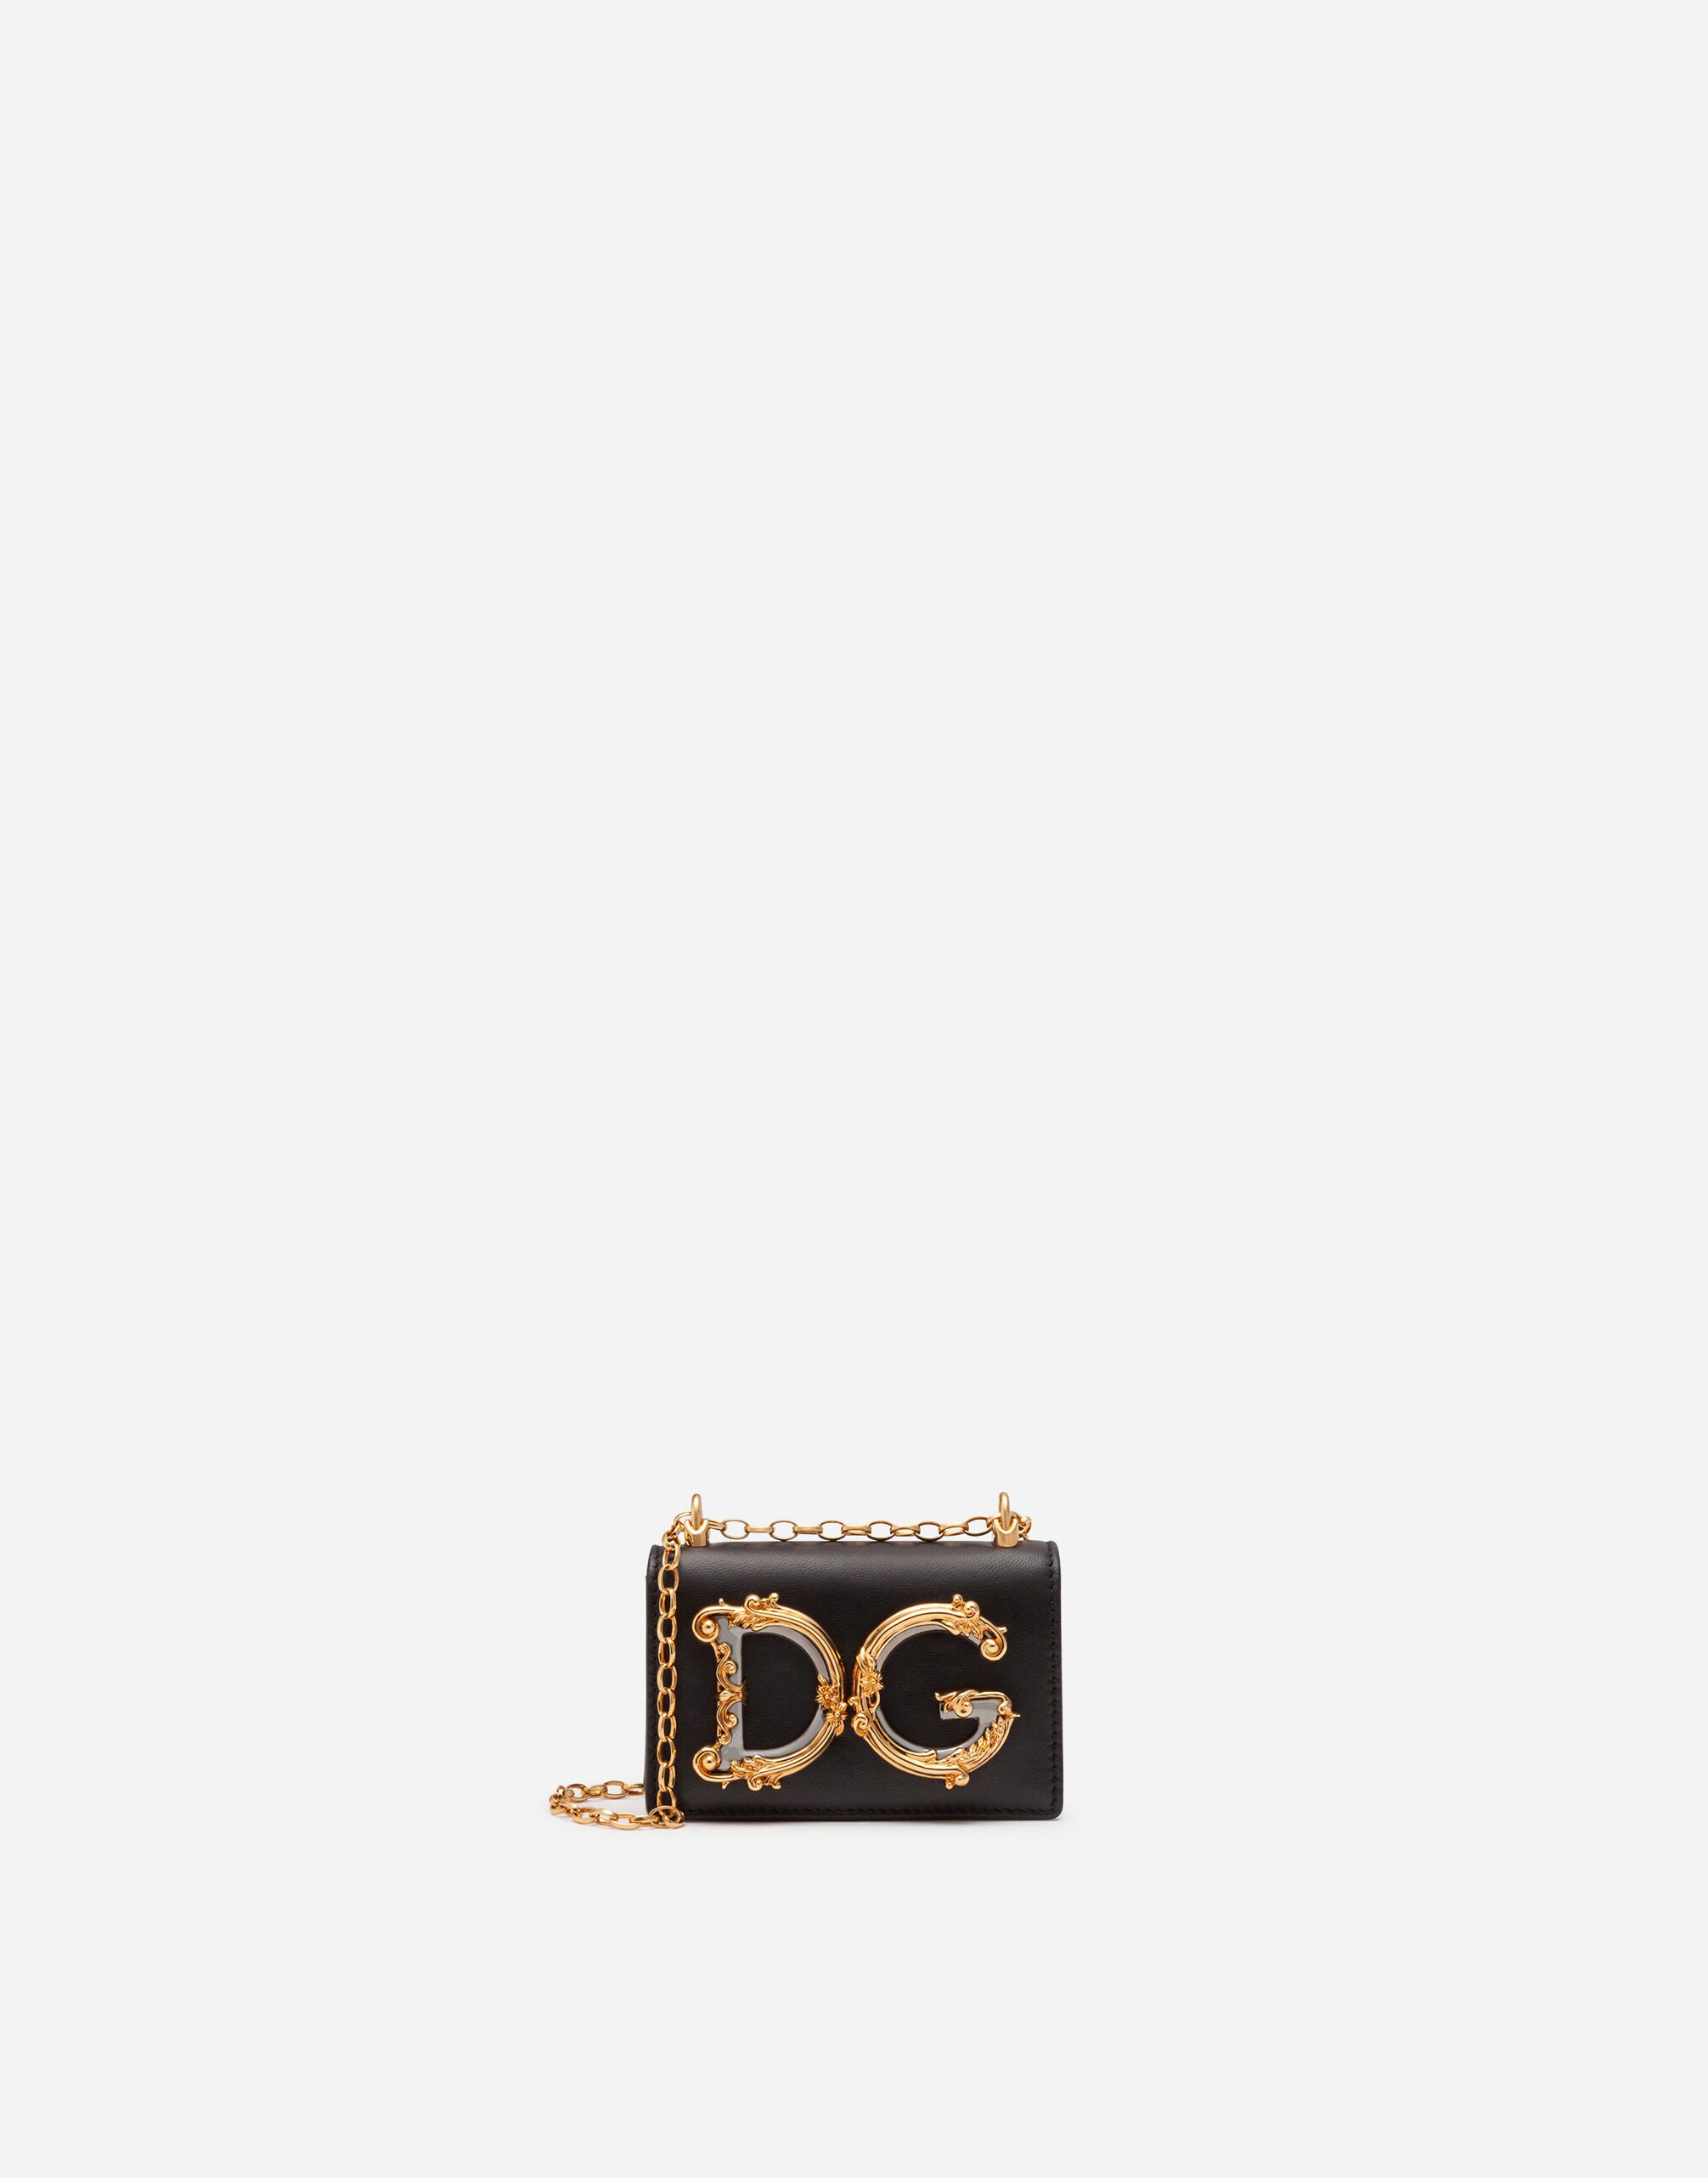 Dolce & Gabbana DG Girls micro bag in plain calfskin Red BB6498AQ963